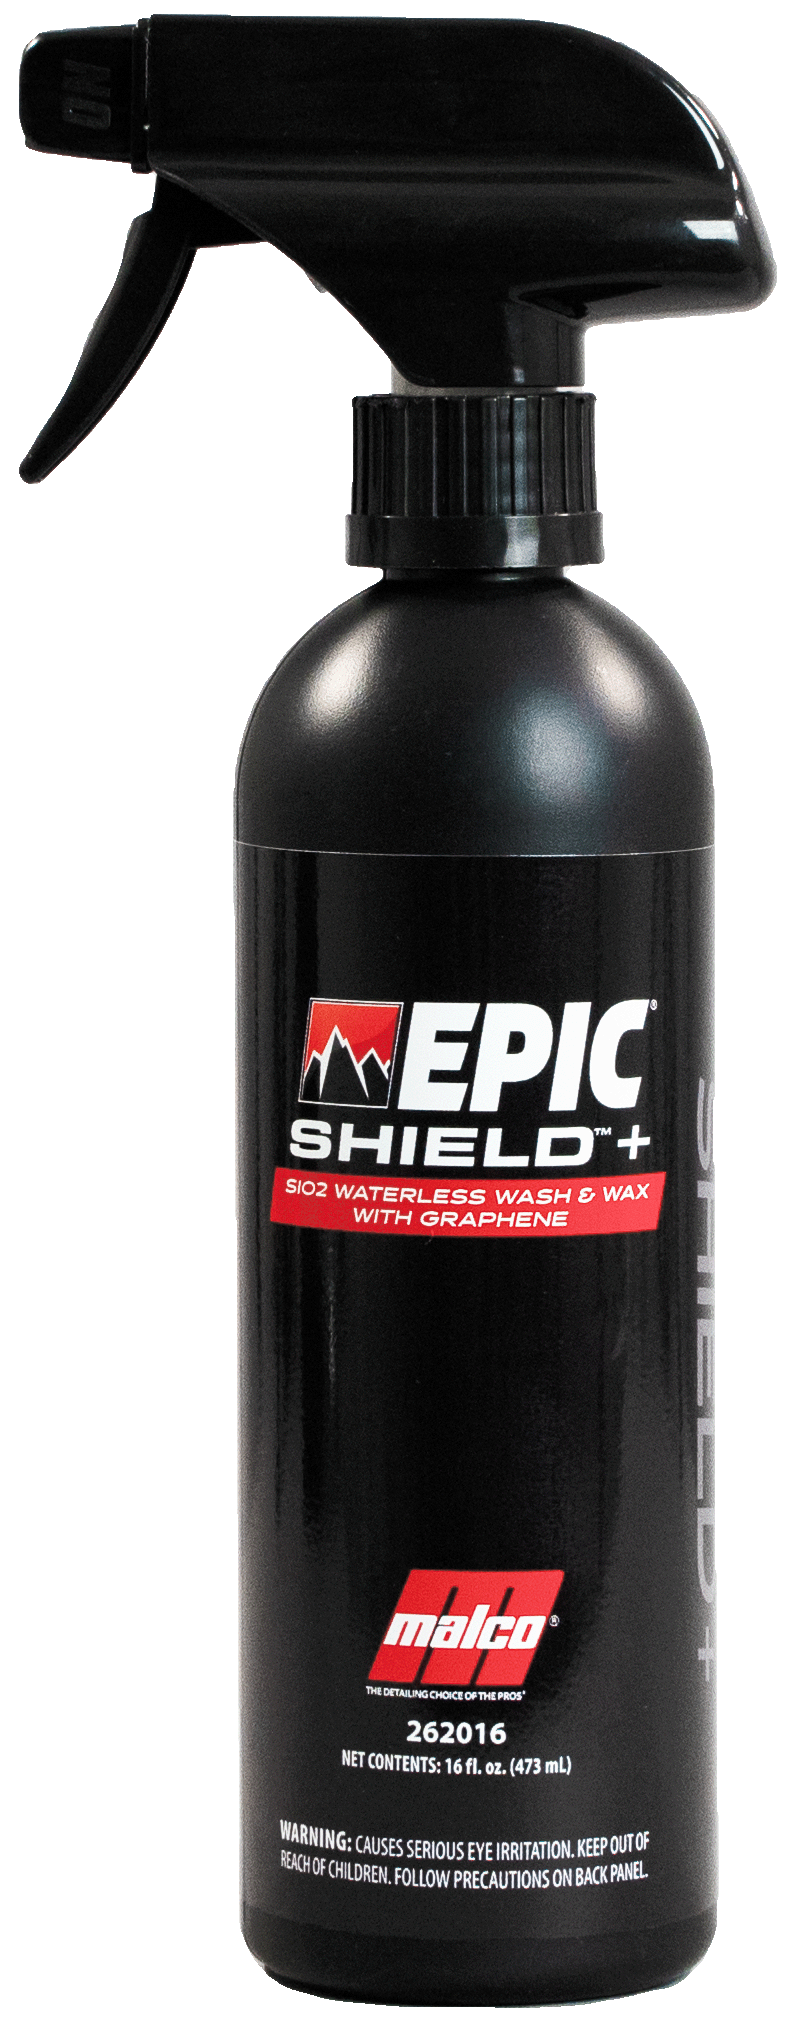 Malco EPIC Shield+ SiO2 Waterless Wash & Wax w/ Graphene